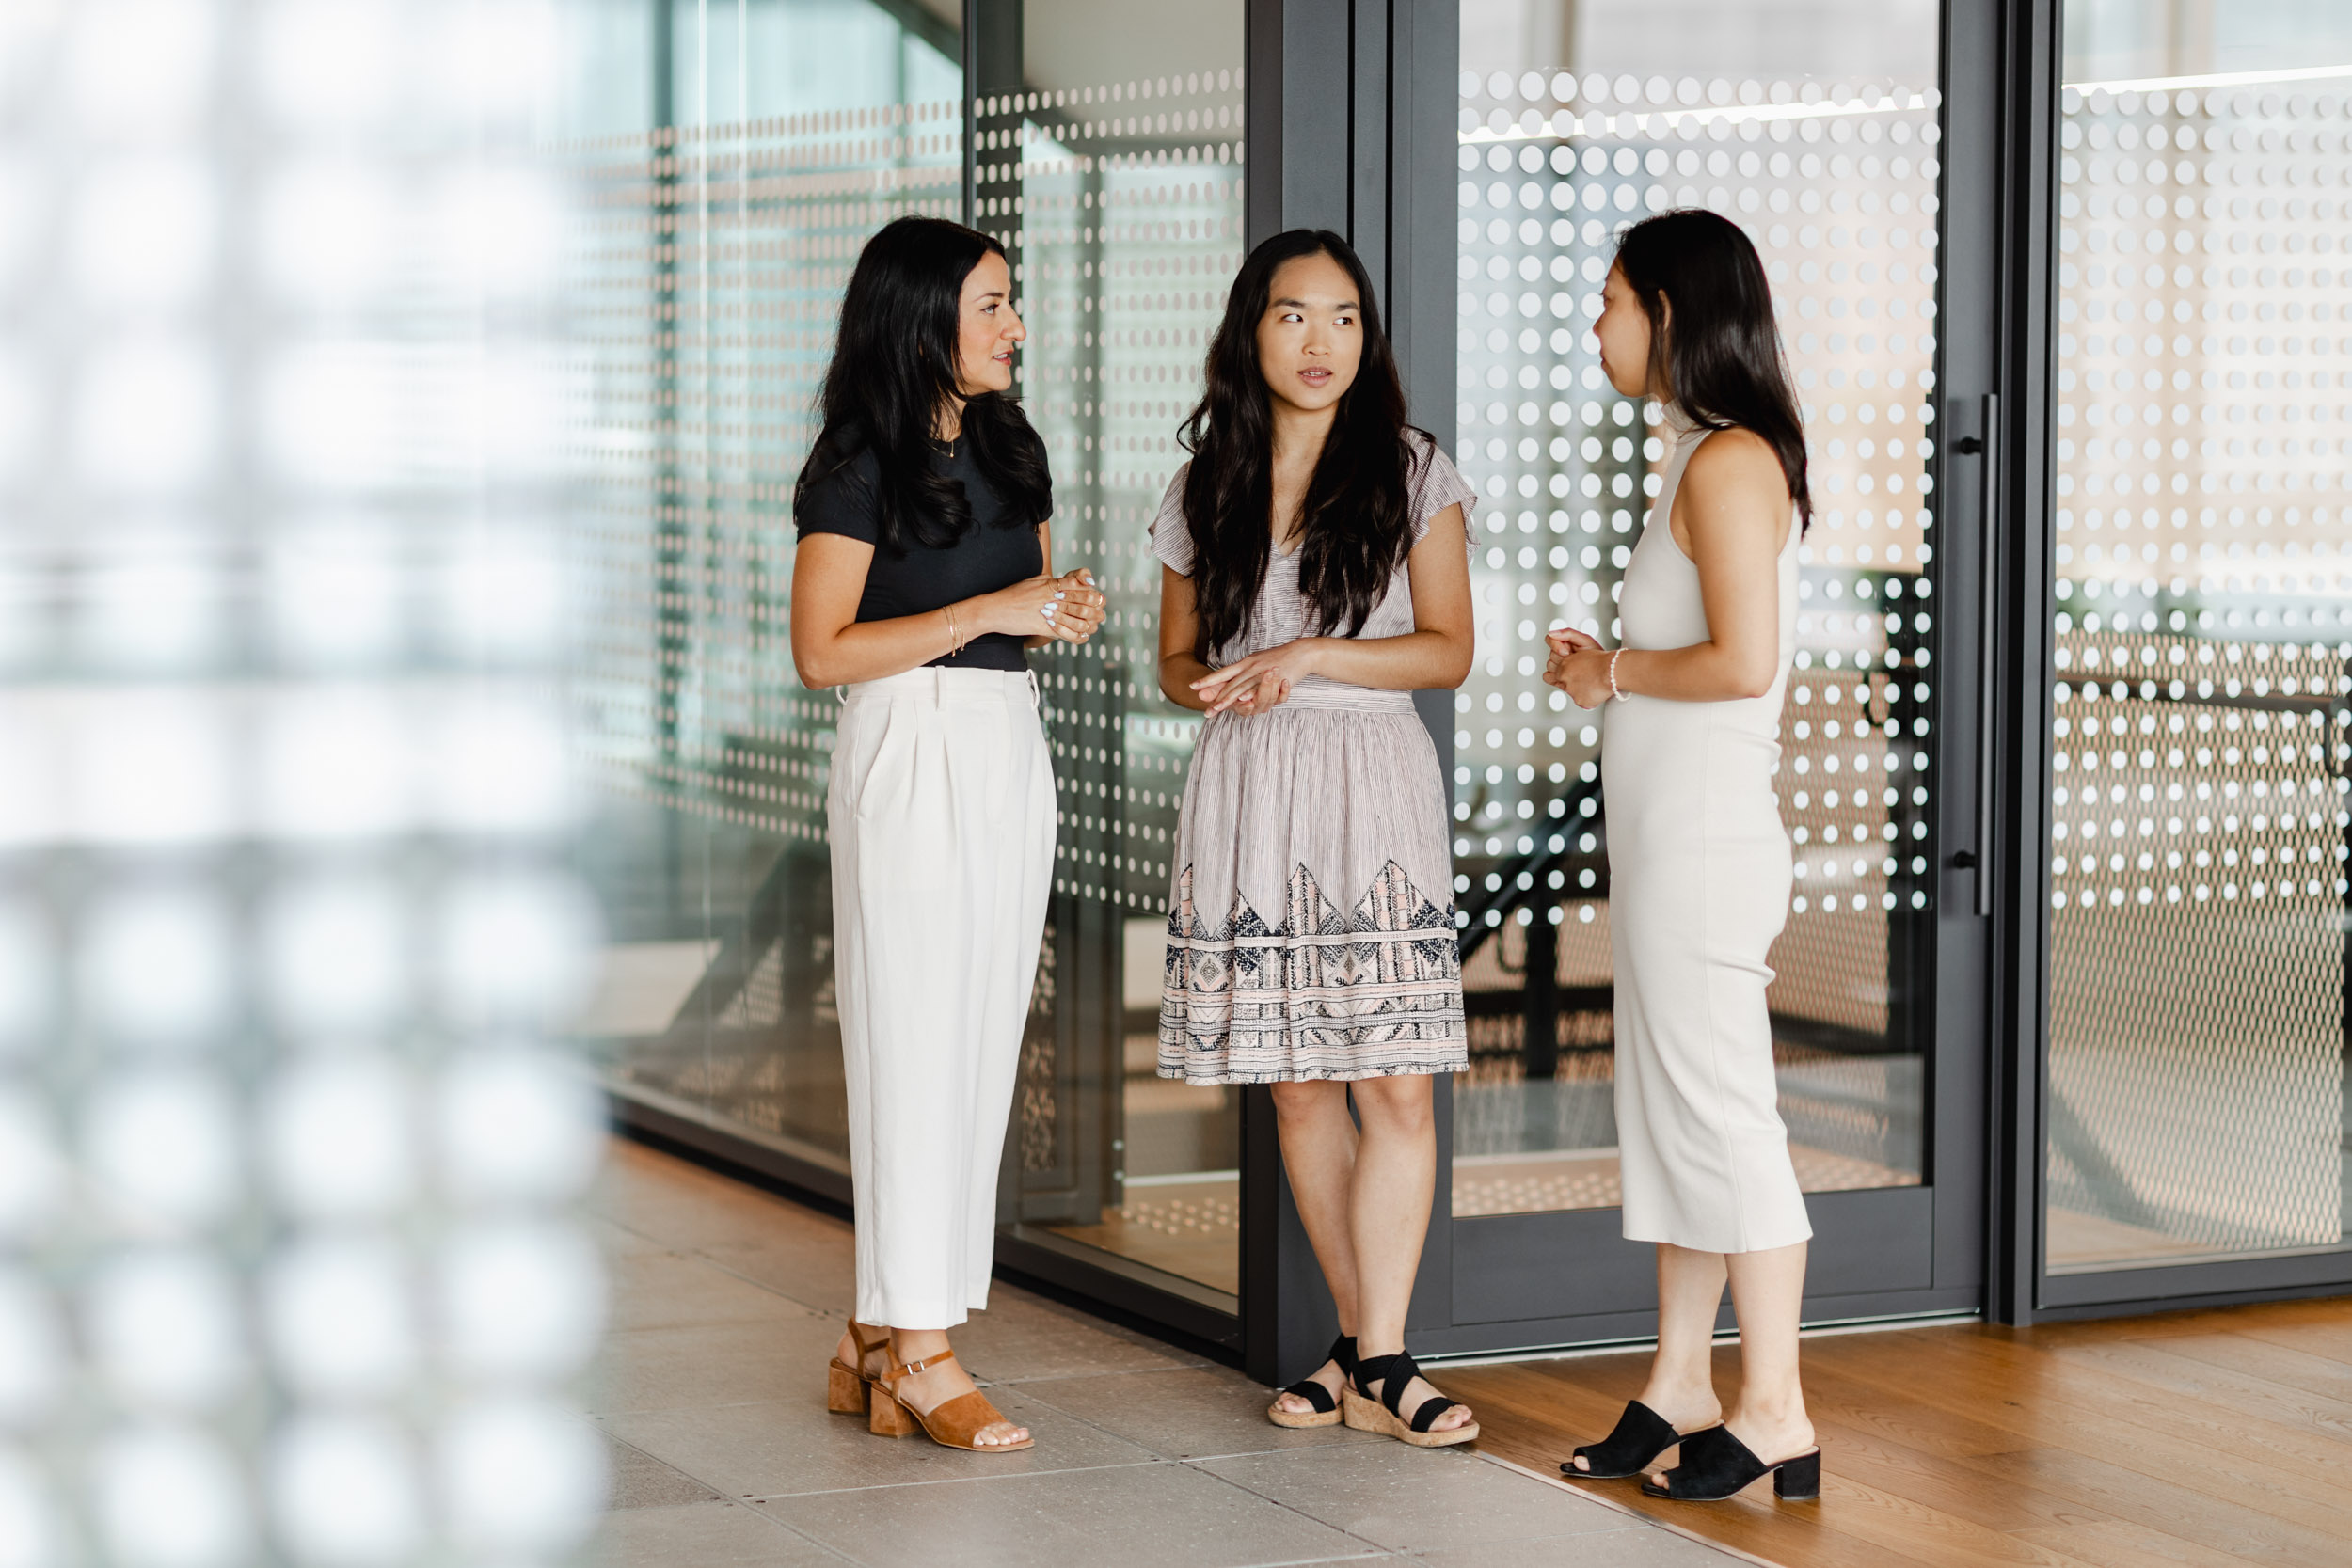 Three asian women discussing Index Exchange in front of a glass door.